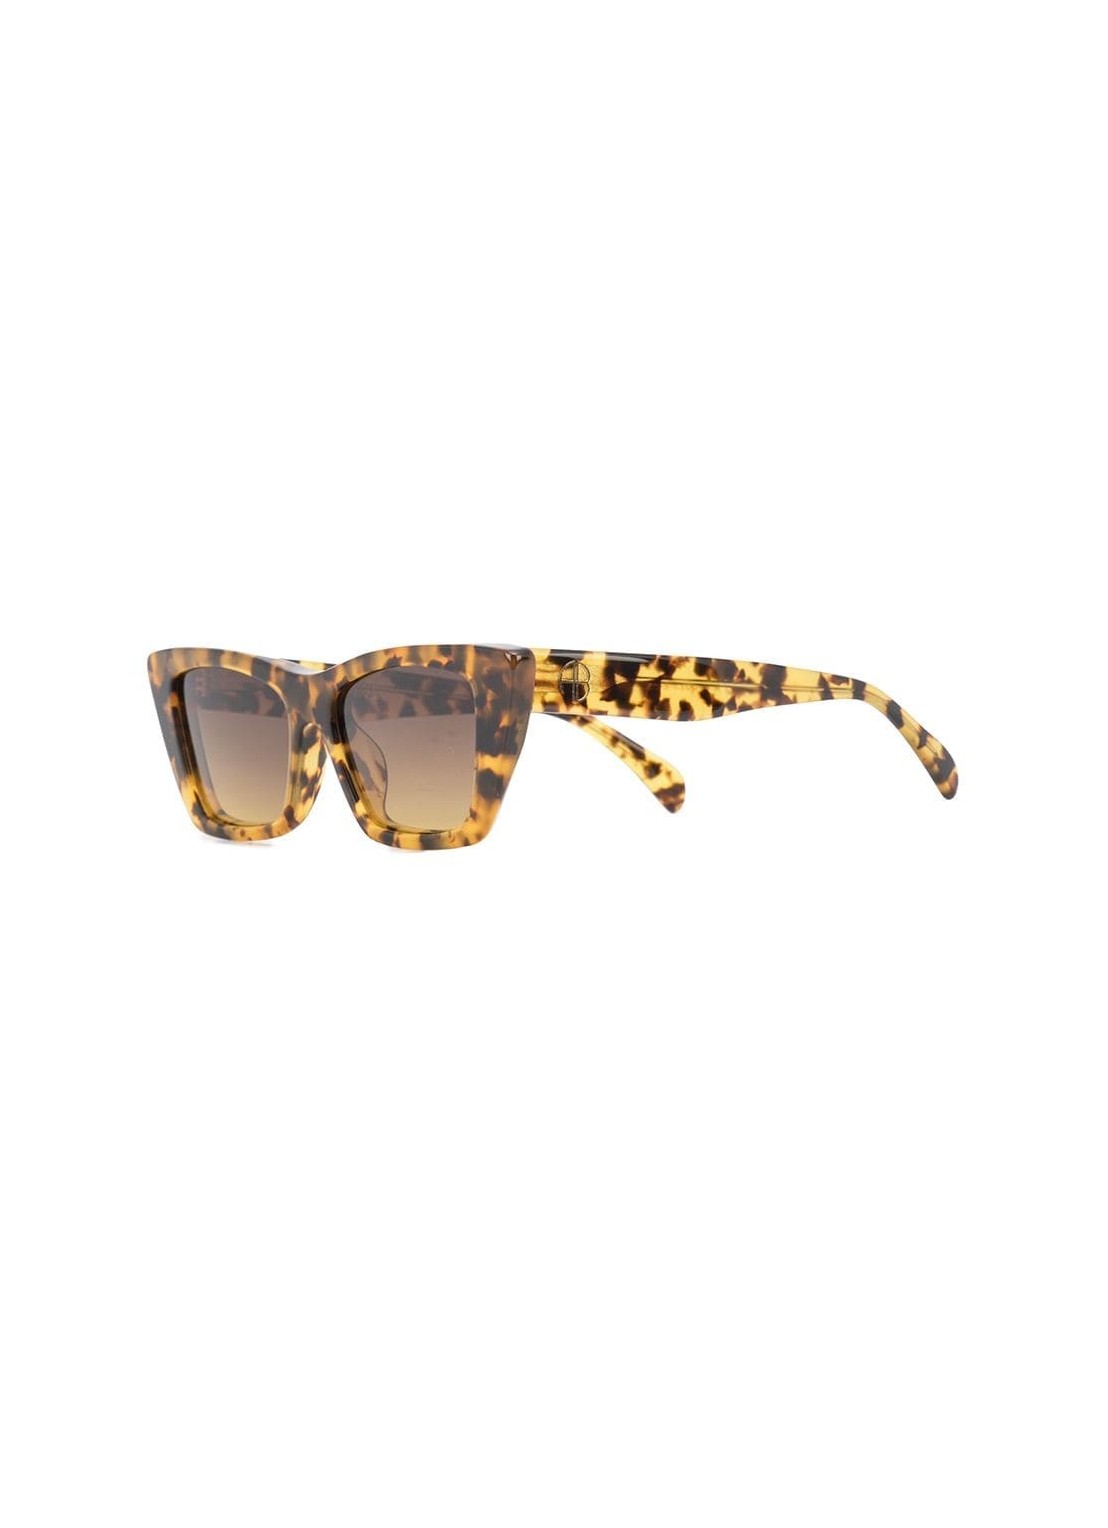 Gafas anine bing sunglasses woman levi sunglasses a120025223 tortoise talla marron
 